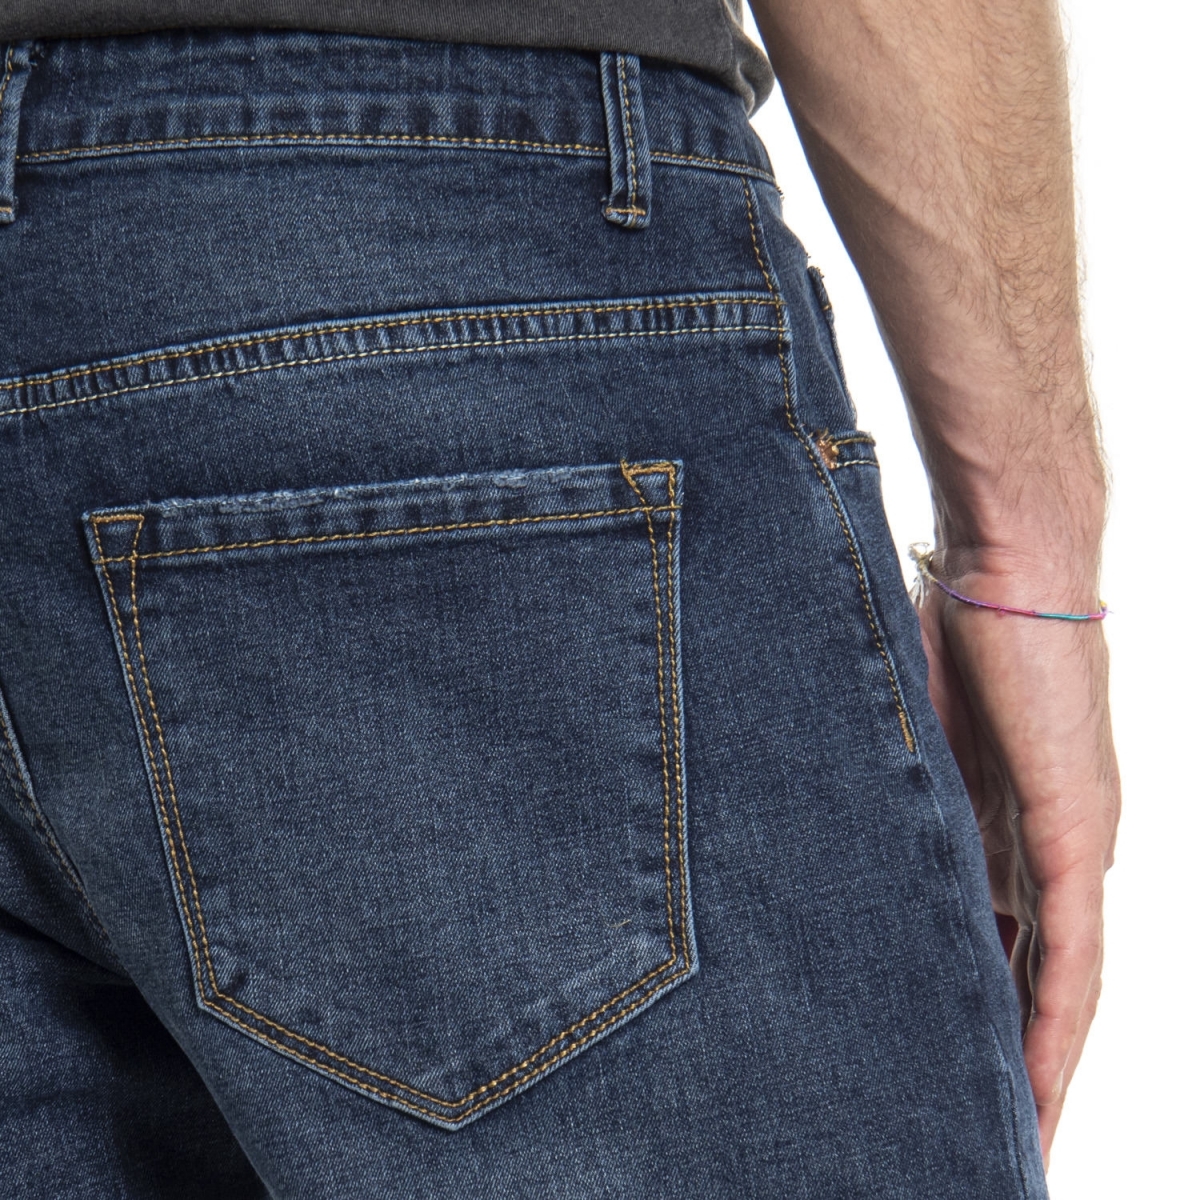 abbigliamento Jeans uomo Jeans Slim Fit ATM1088-7 LANDEK PARK Cafedelmar Shop